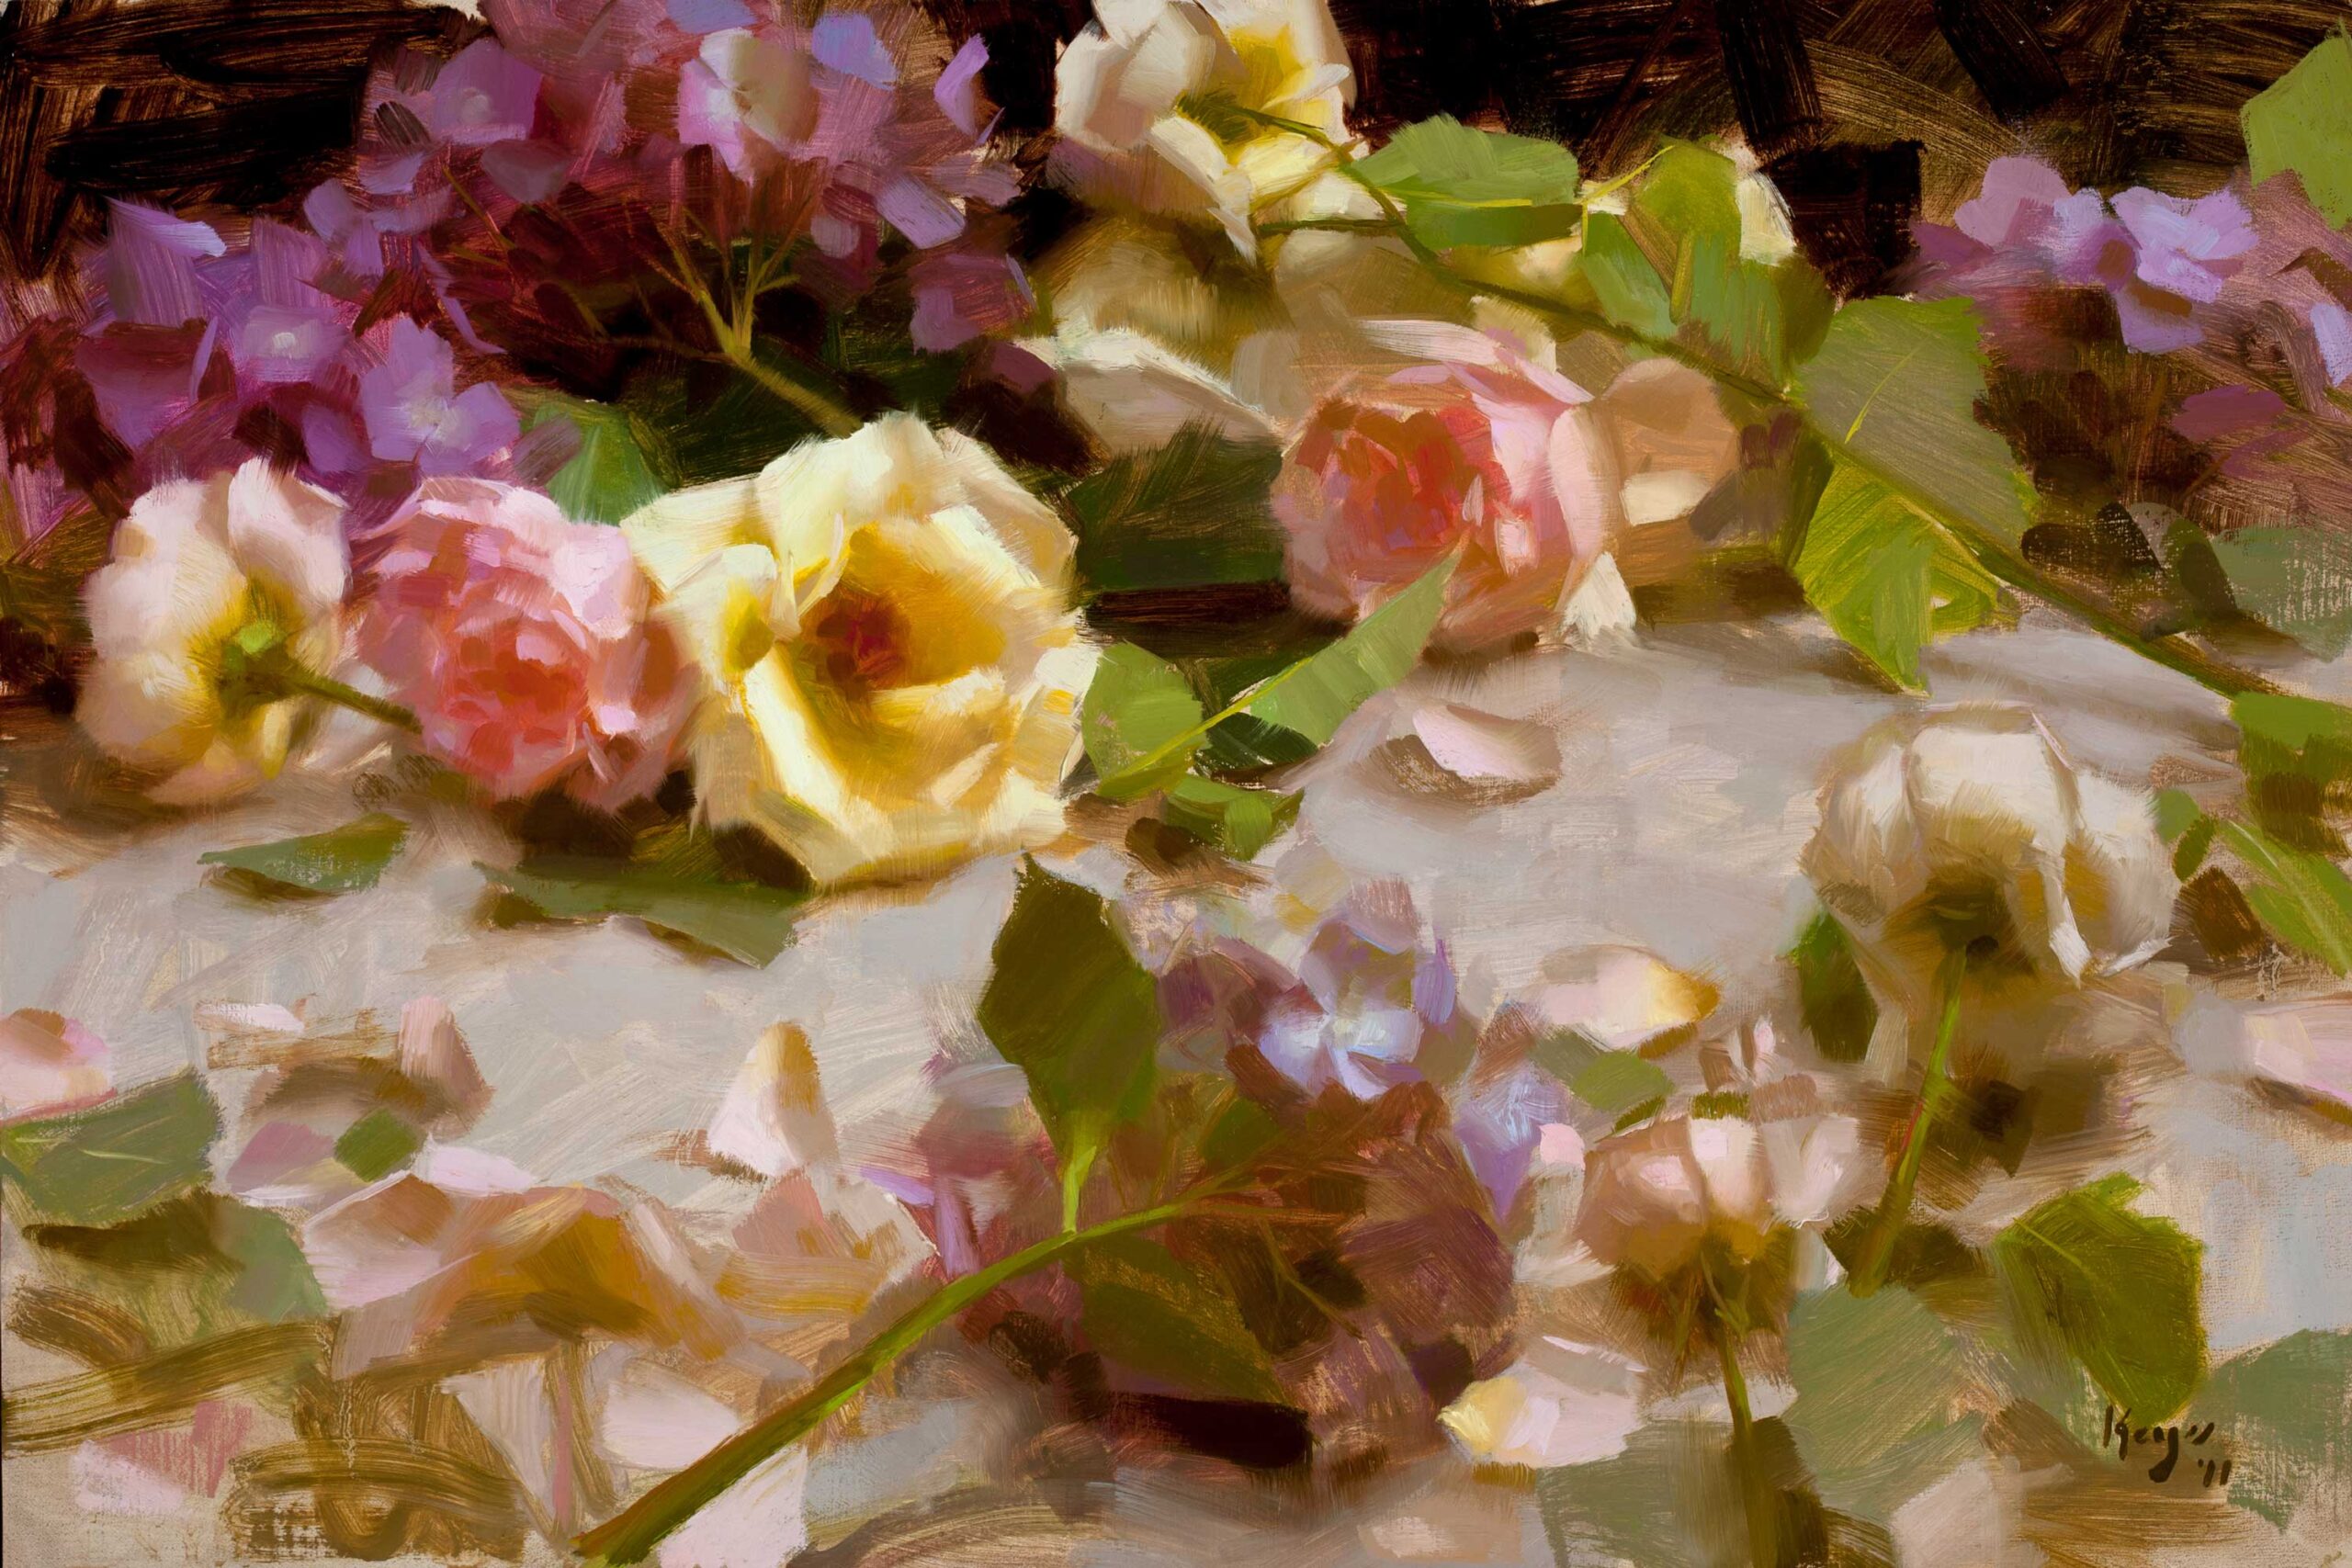 Daniel Keys, "Roses and Hydrangeas," 2011 16" x 24", oil on linen